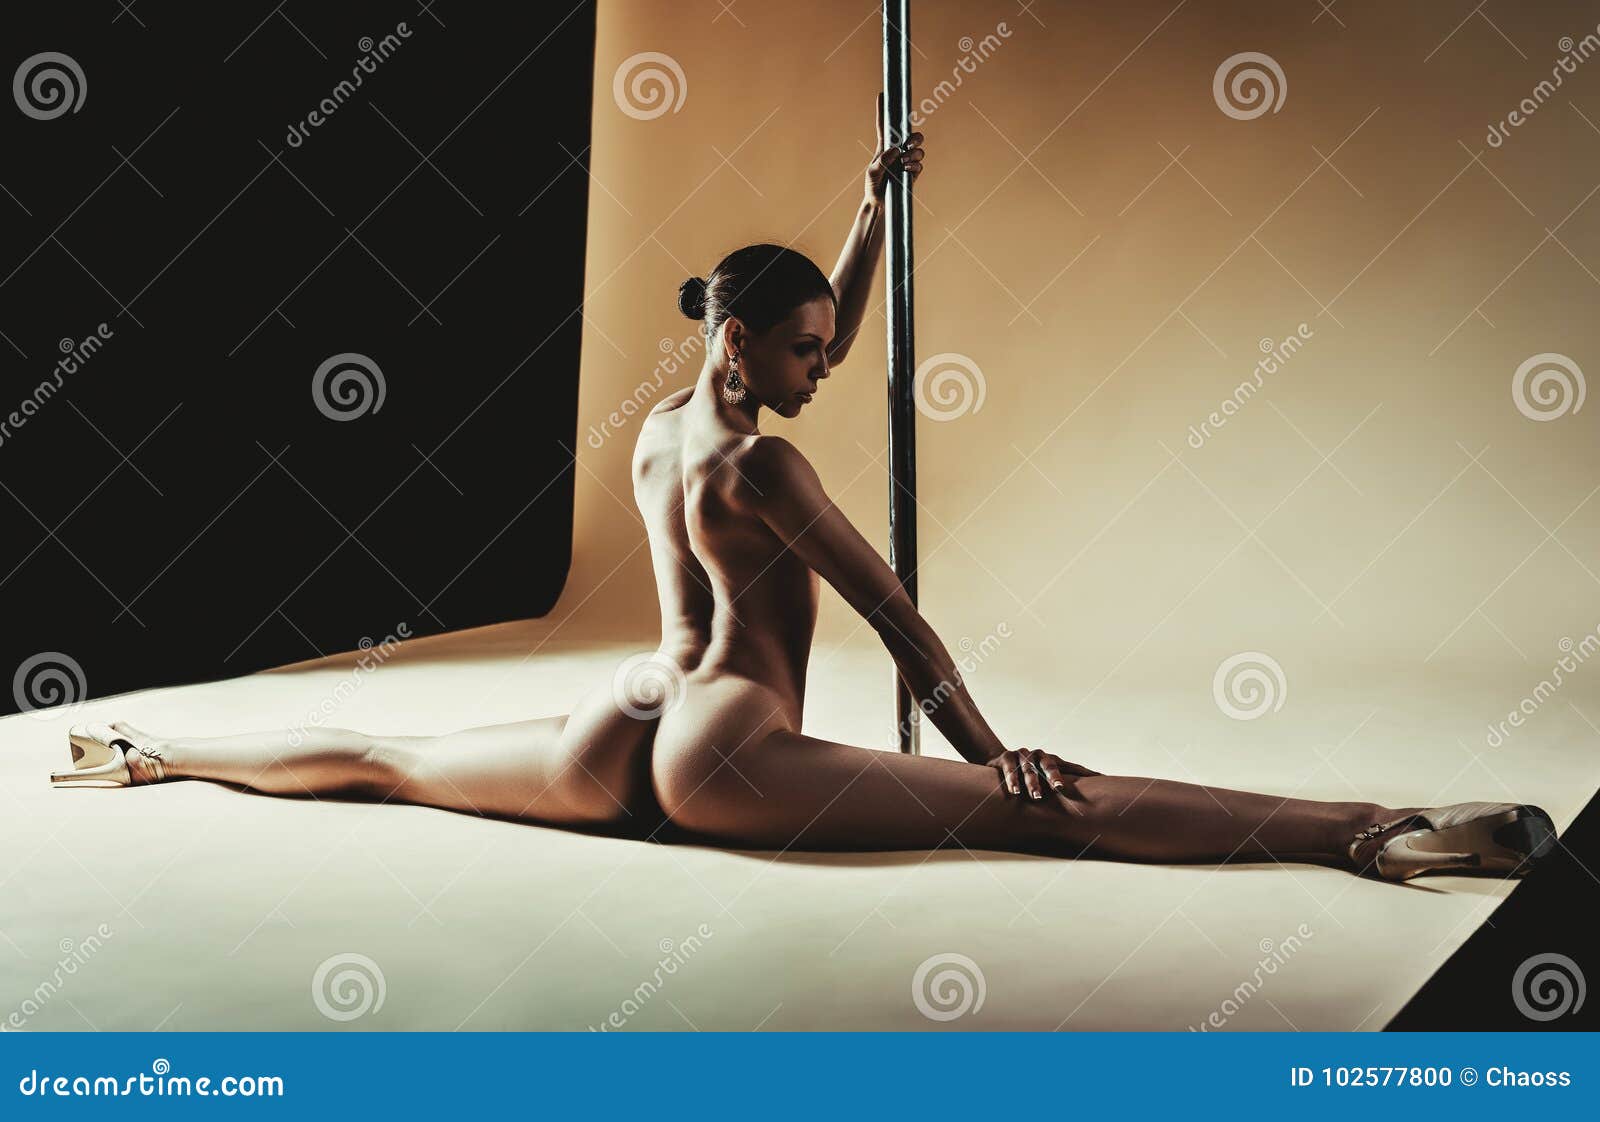 Best of Naked women pole dancing